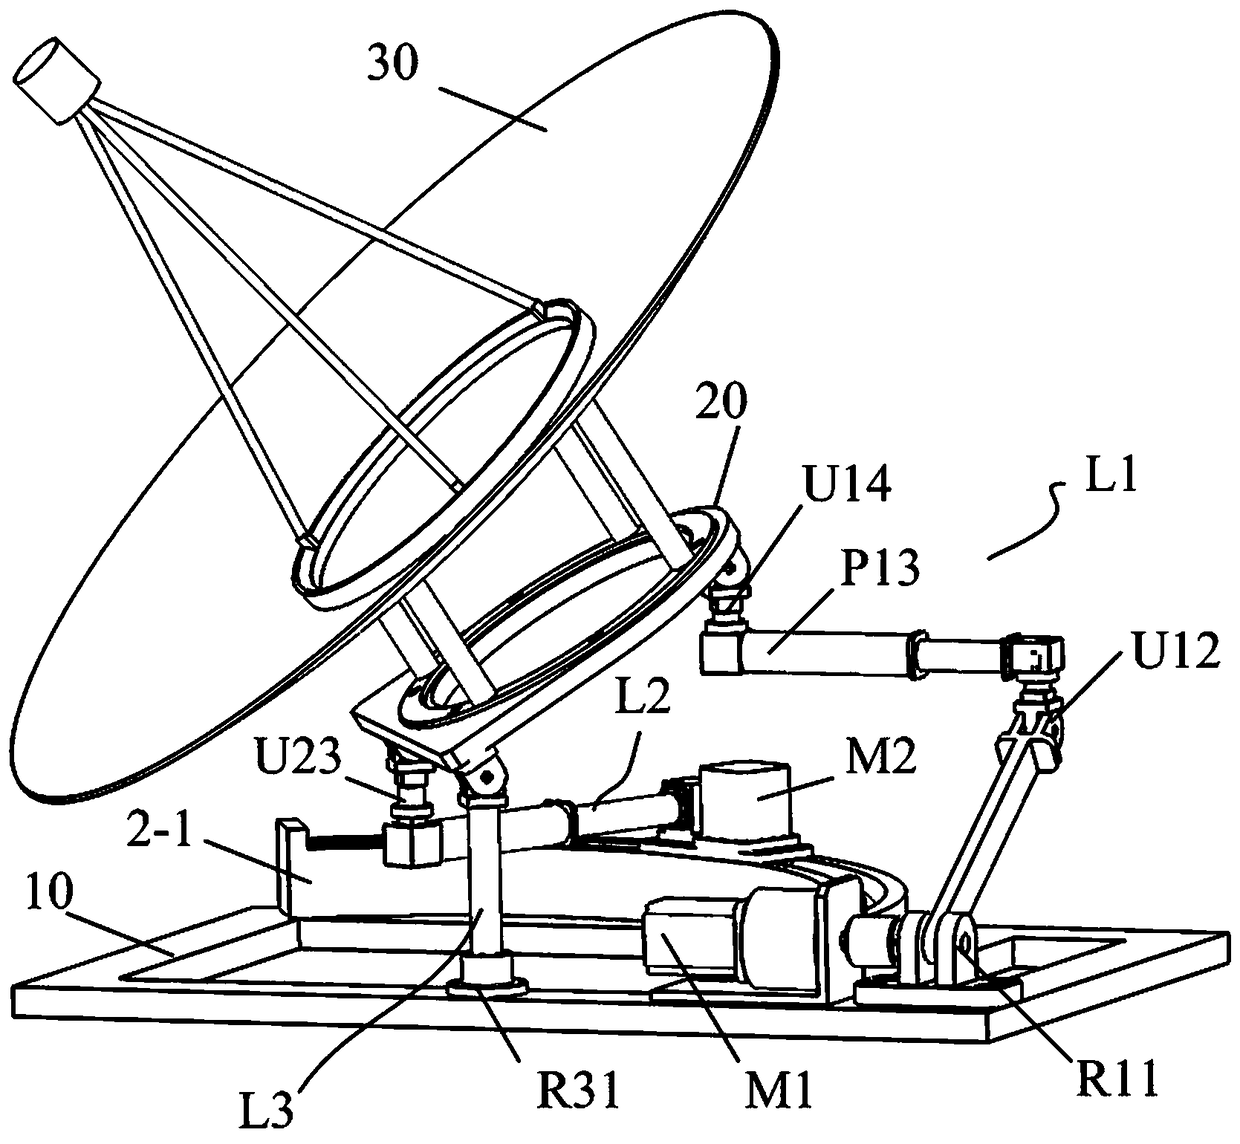 Parallel-type satellite antenna attitude adjusting apparatus